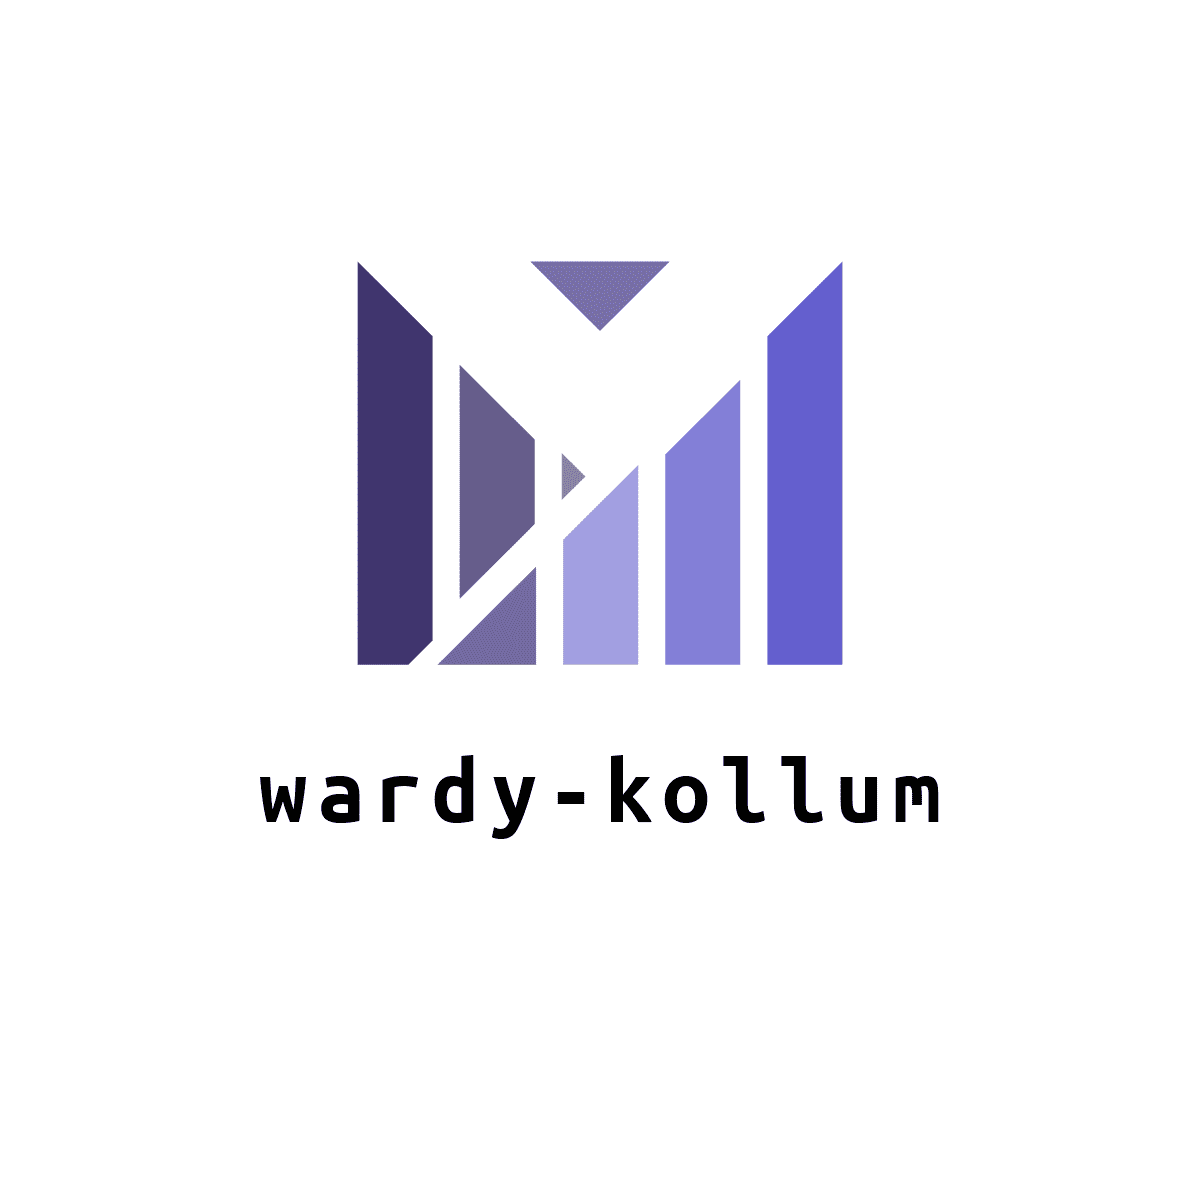 Wardy-kollum